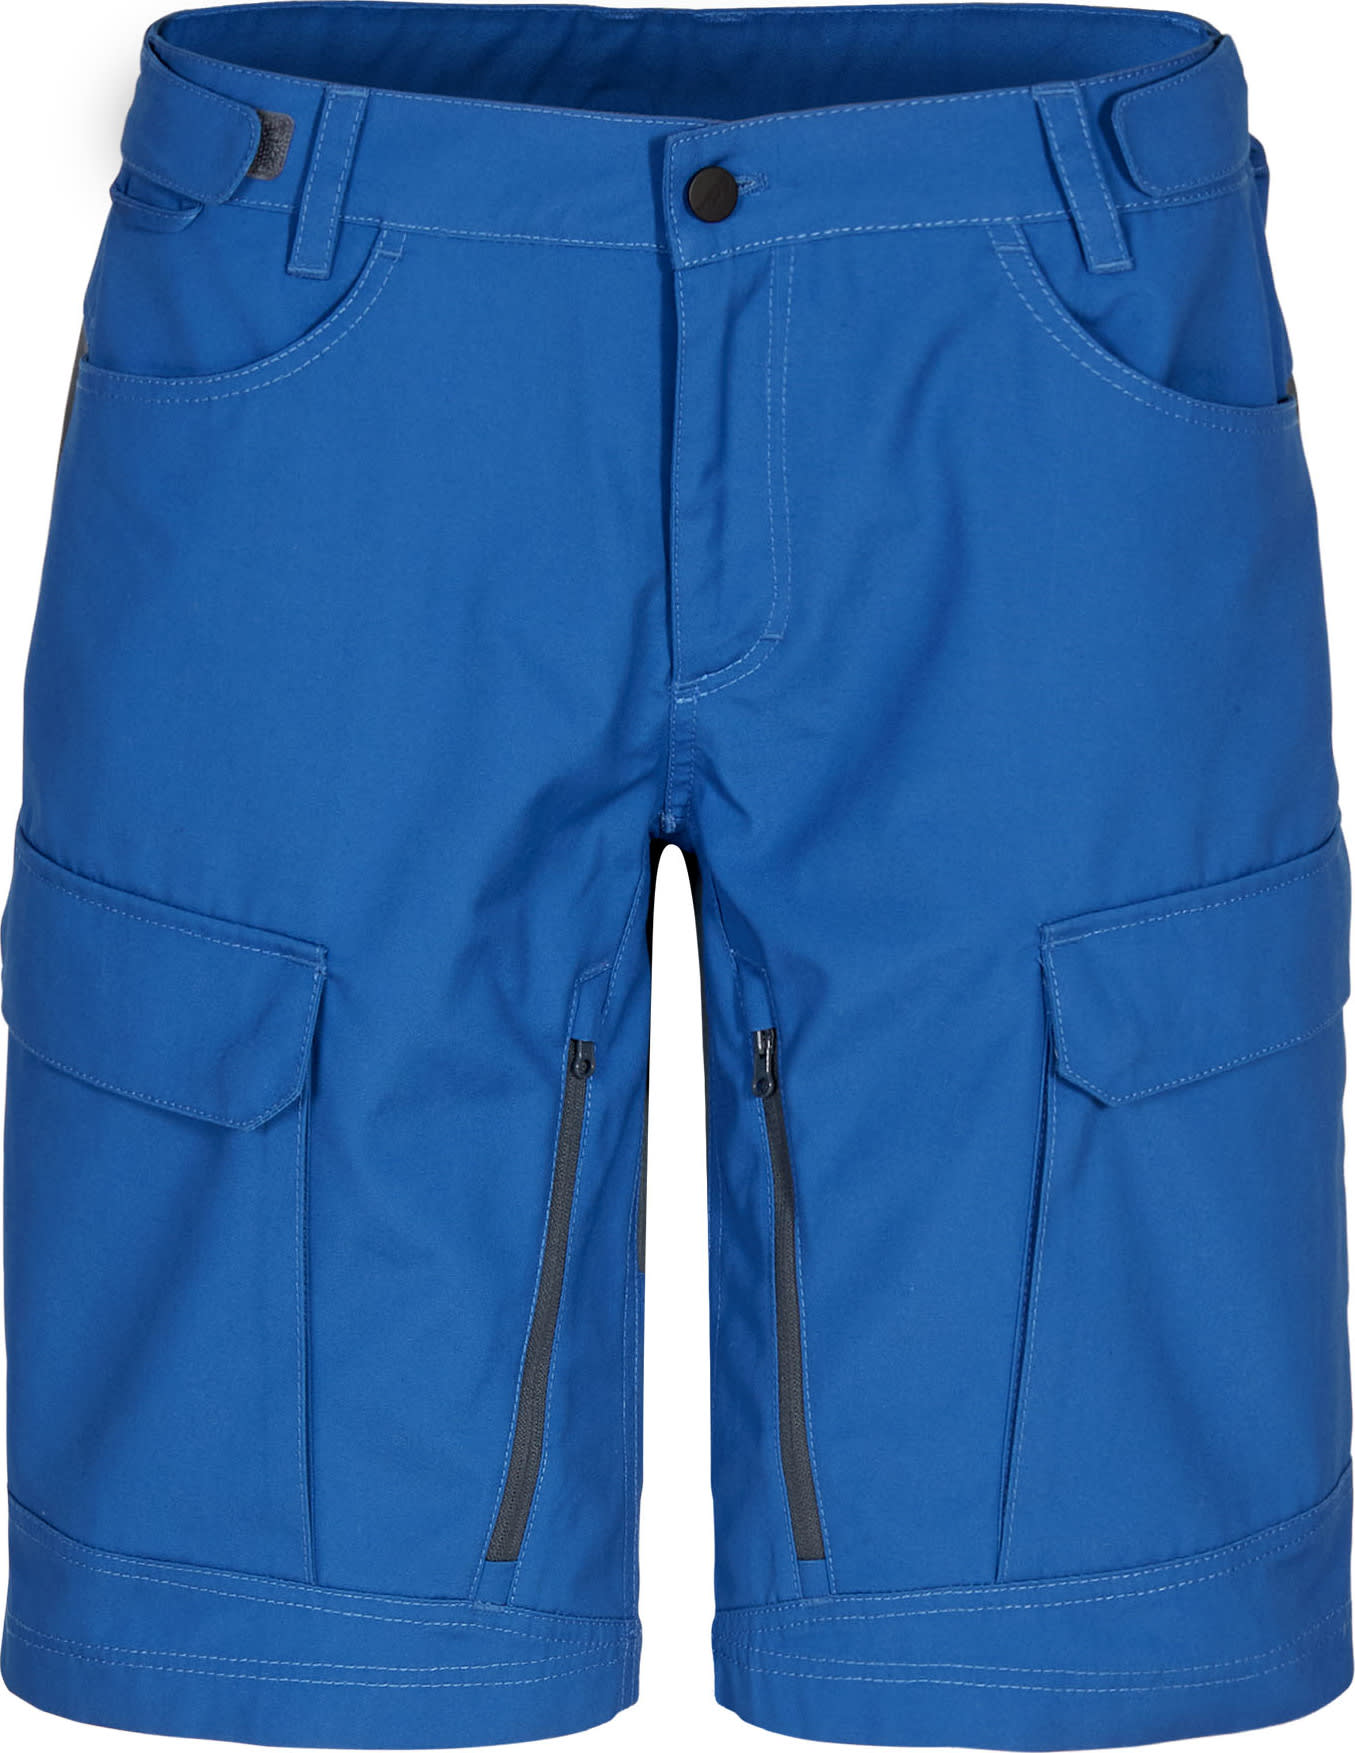 Granheim Hiking Shorts Women’s Snorkel Blue